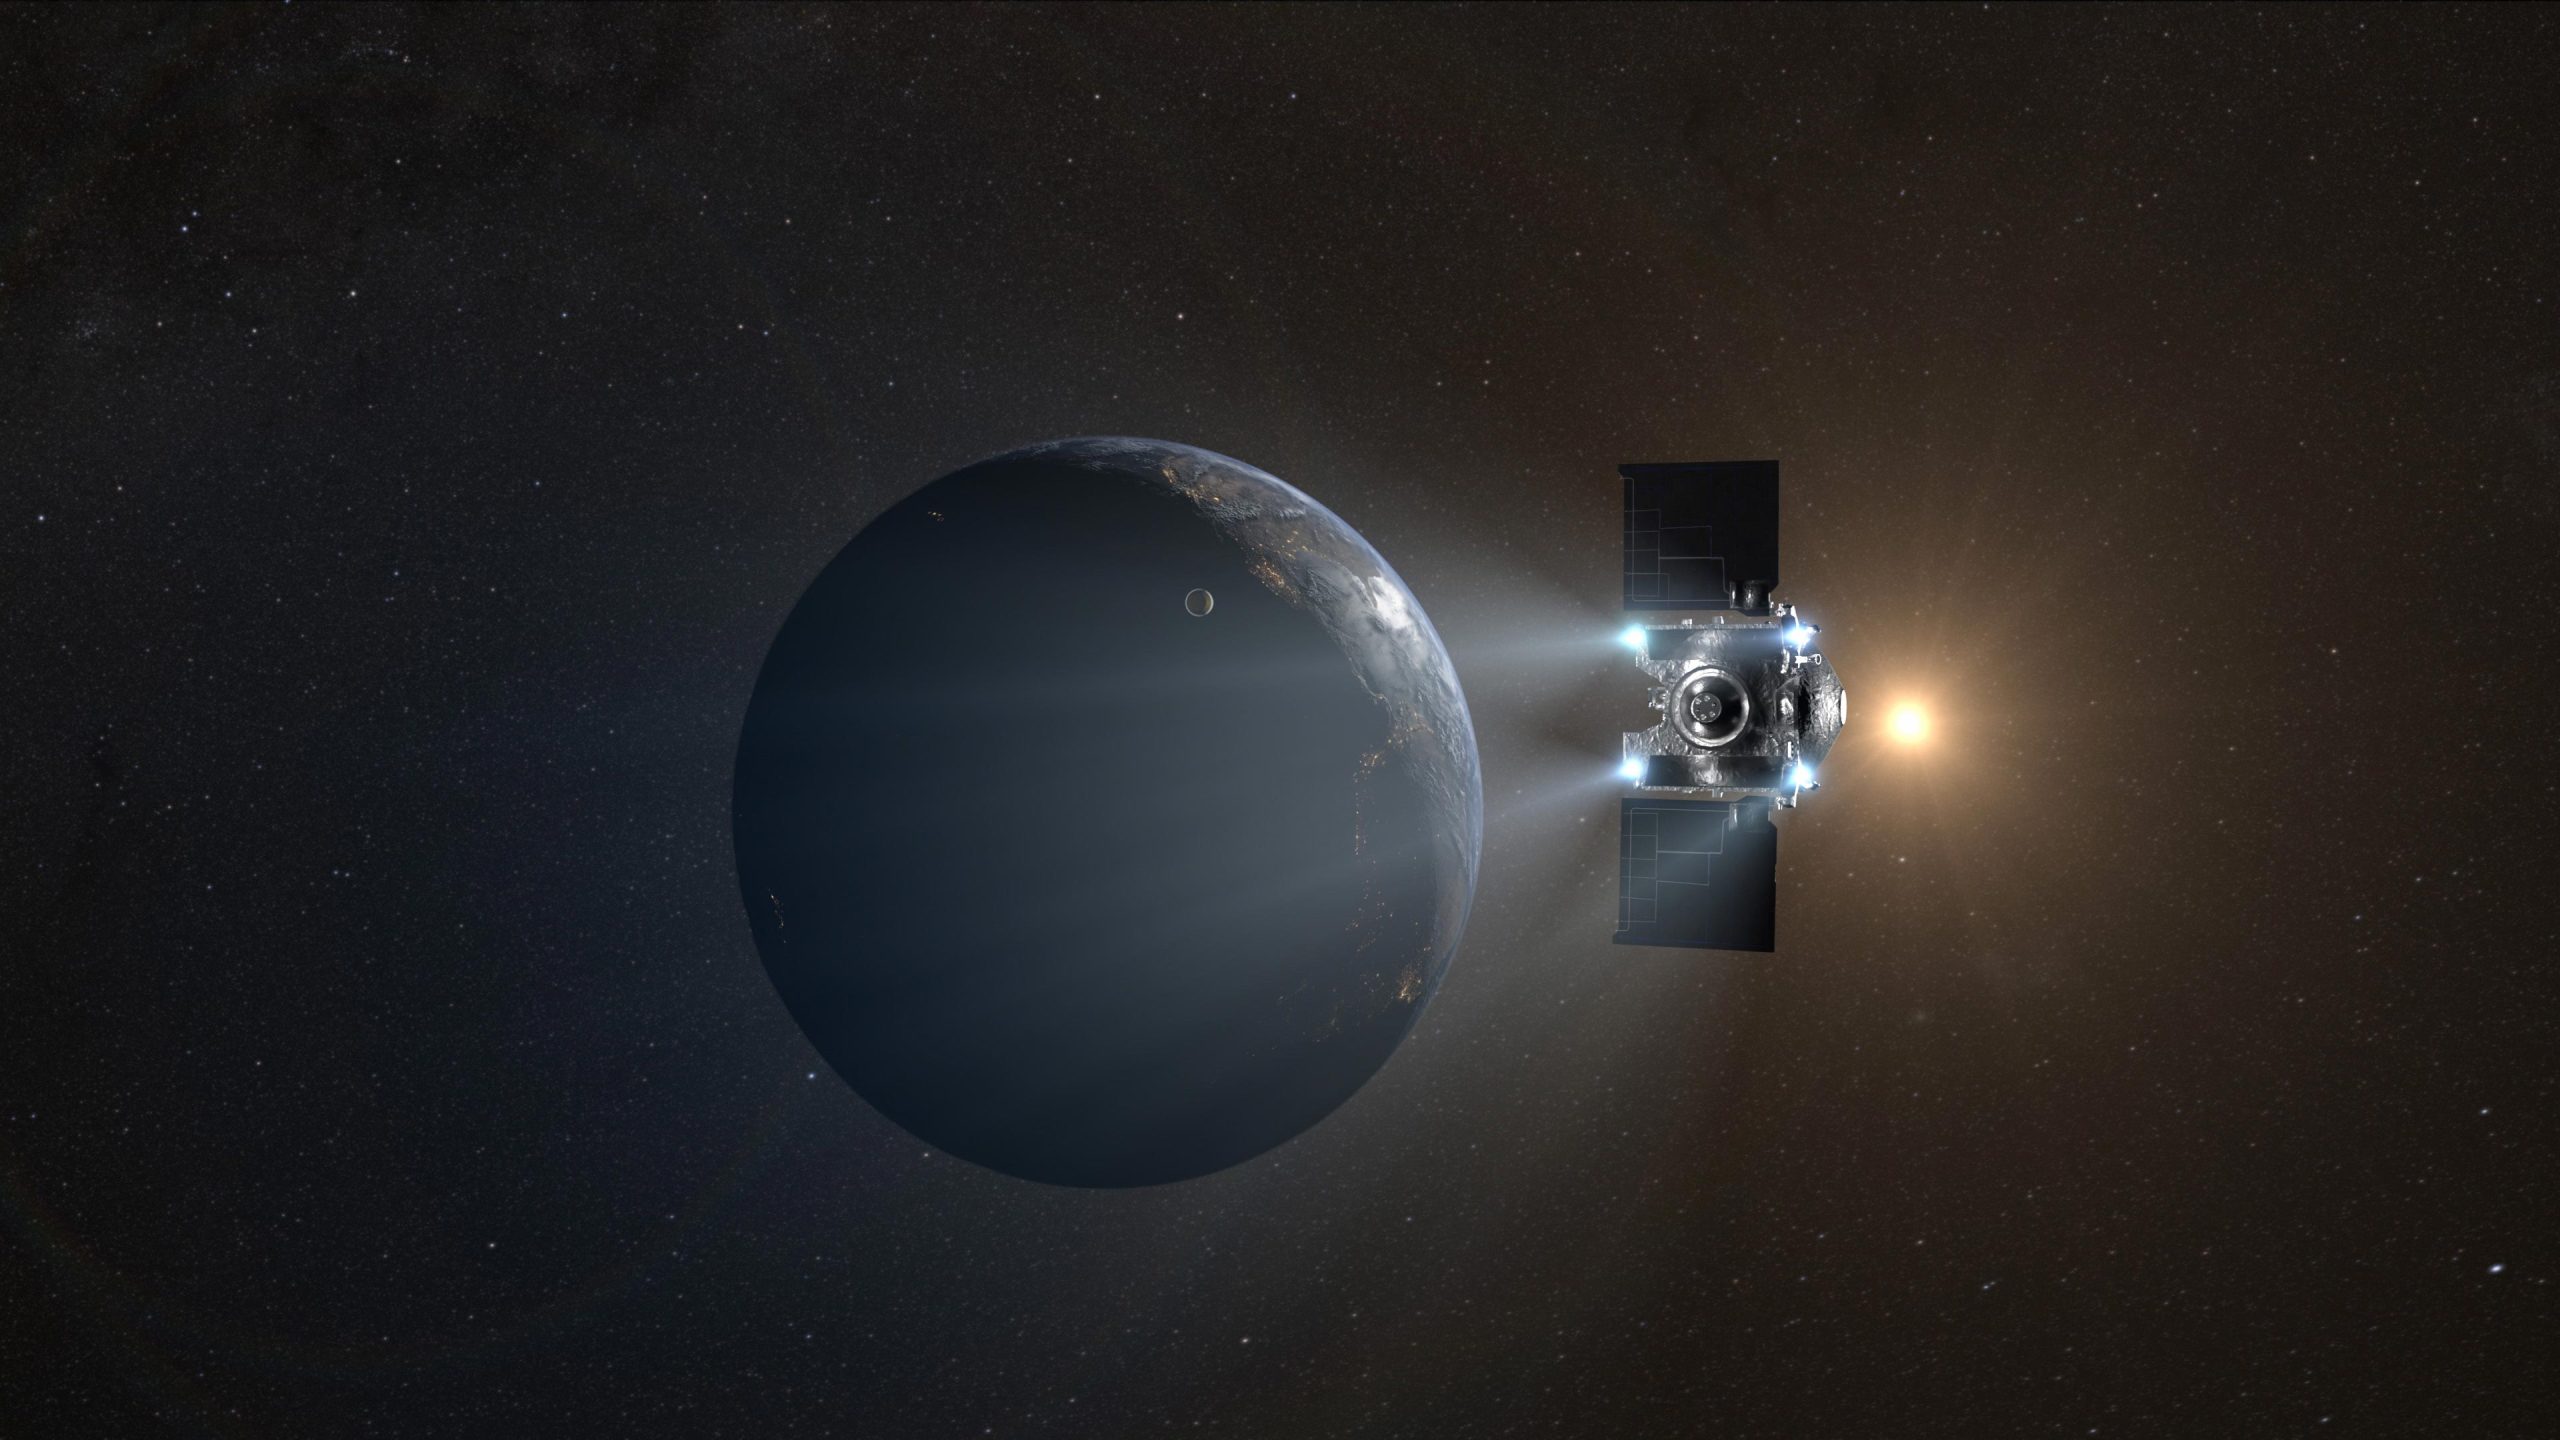 OSIRIS-REx de la NASA se prepara para una entrega épica de asteroides